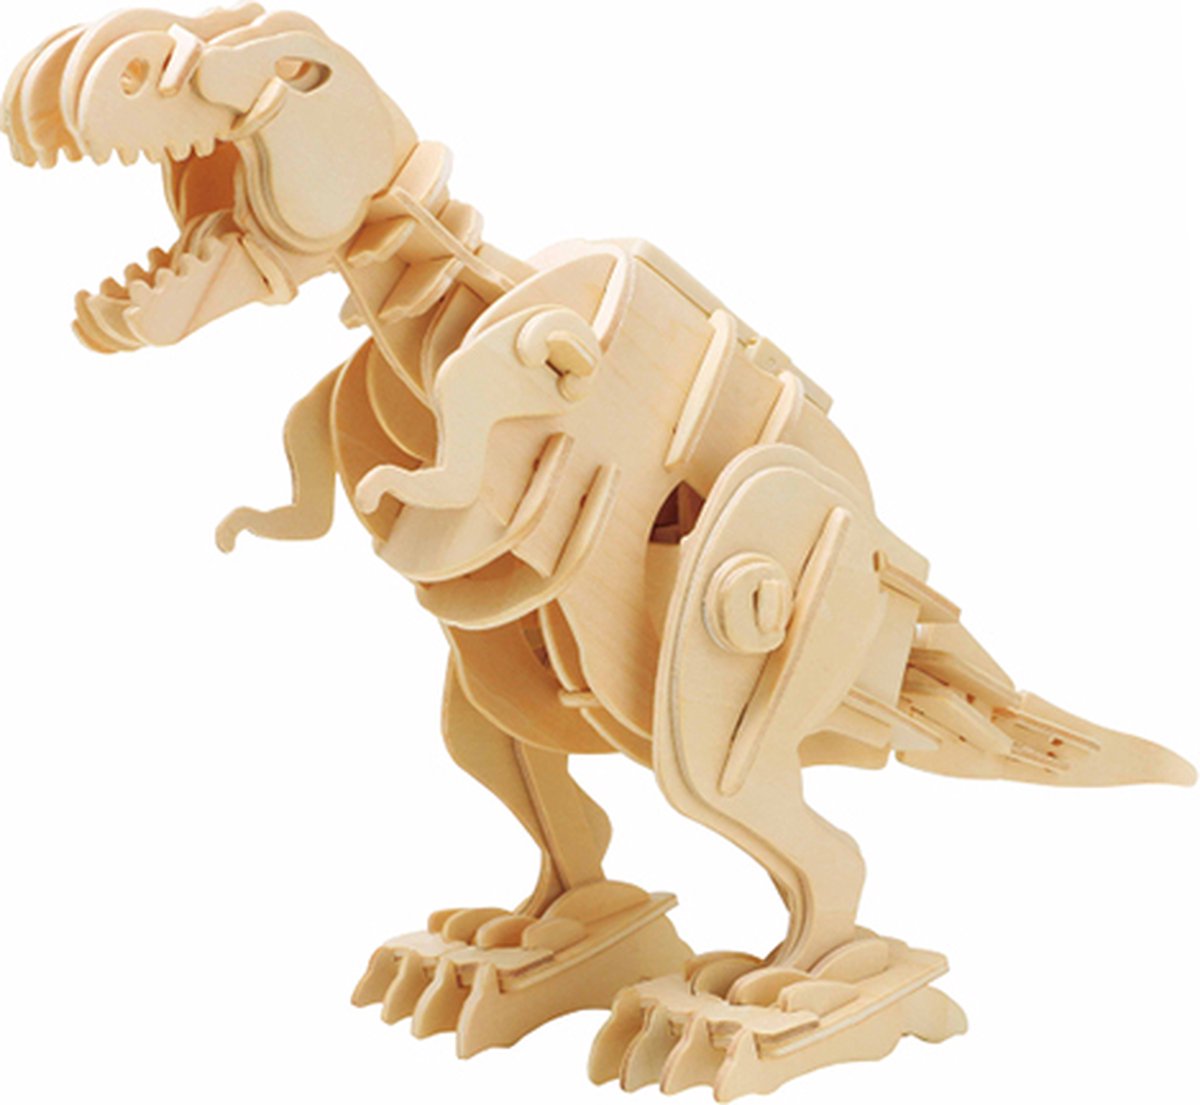 Robotime modelbouwpakket T-Rex dinosaurus hout - 225mm hoog x 315mm lang x 120mm breed - incl. motor en kan lopen en geluid maken